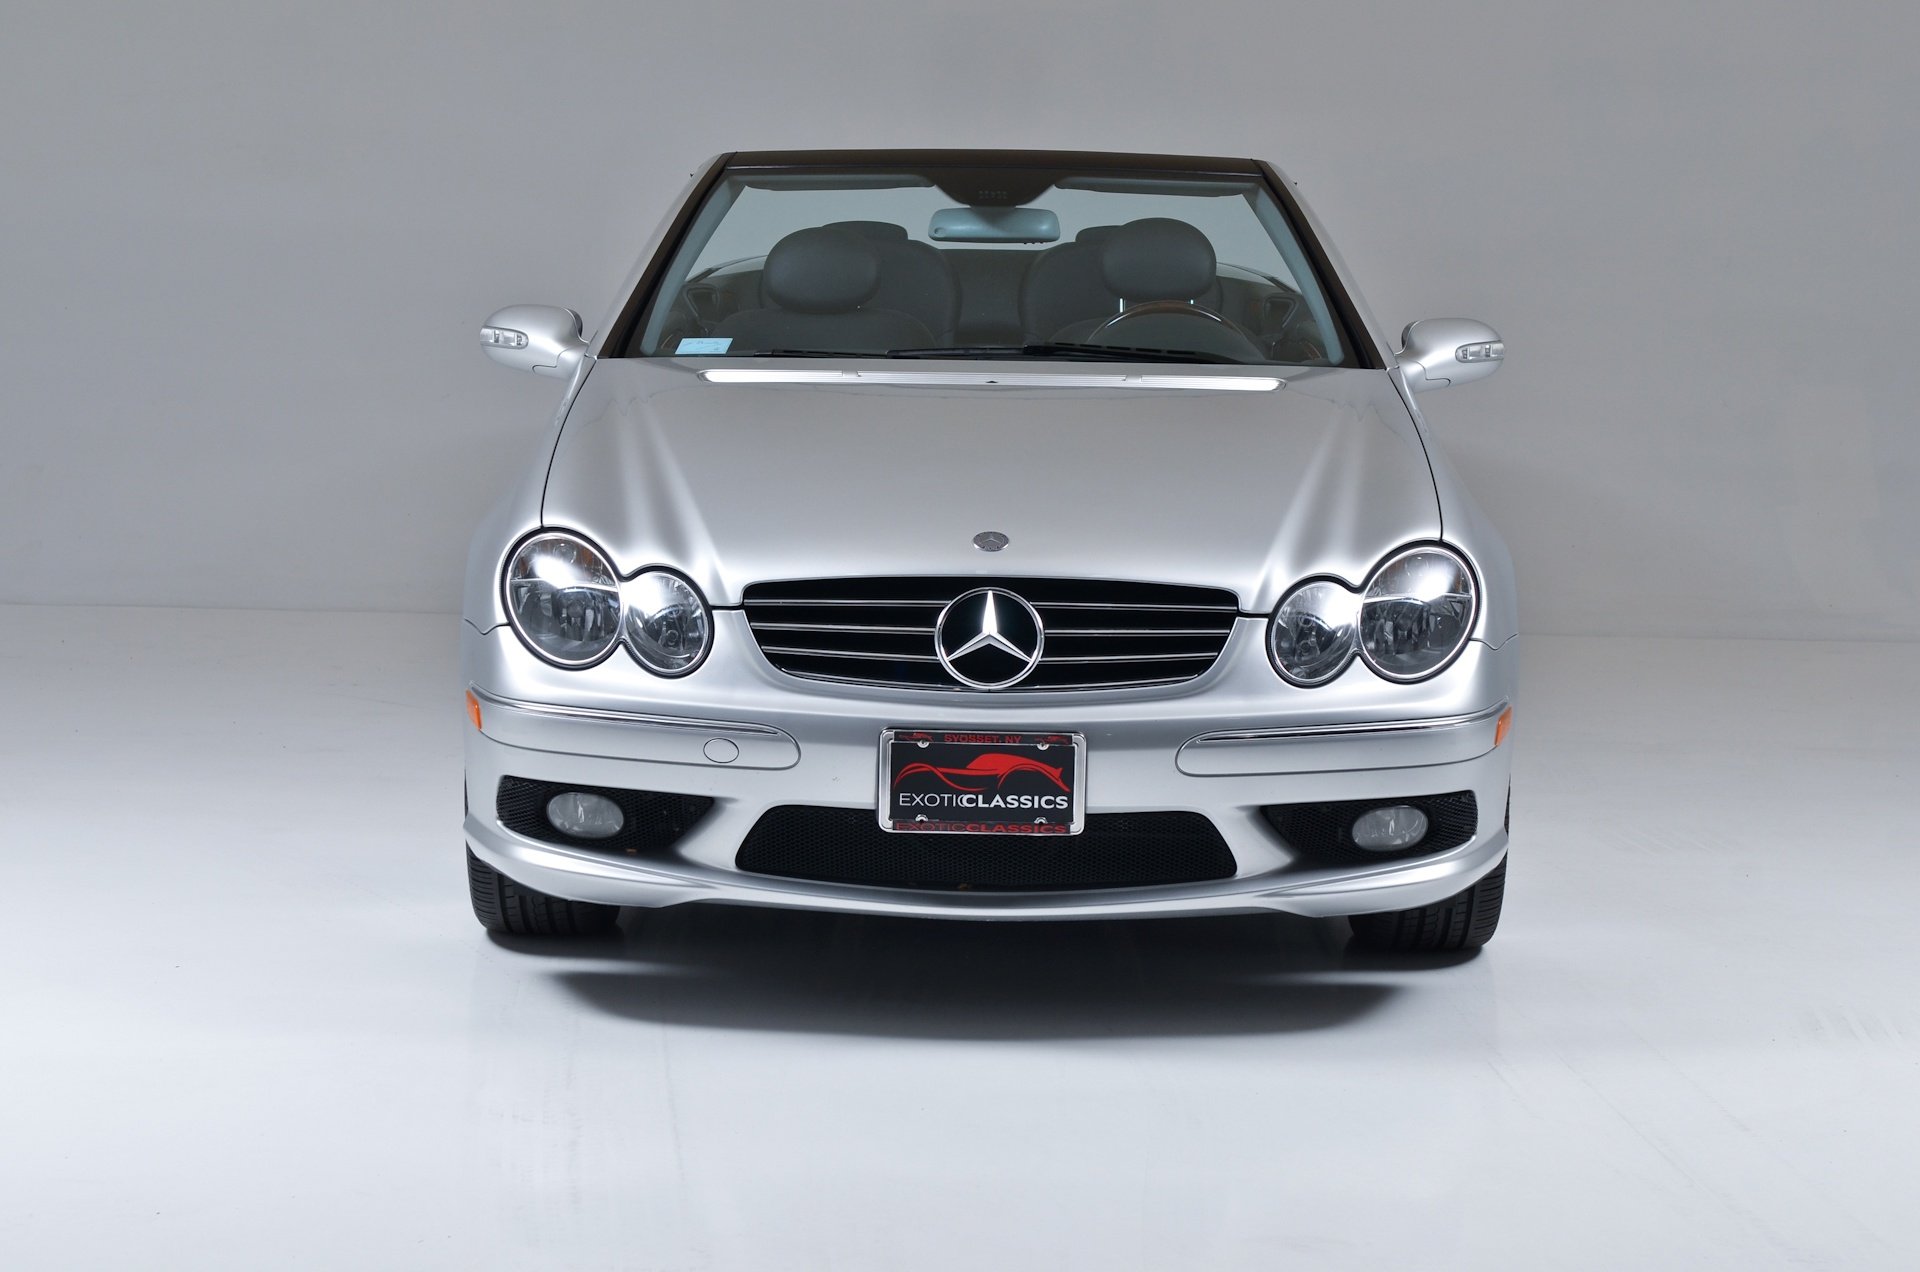 2005, Mercedes, Clk 500, Convertible, Silver, Cars Wallpaper